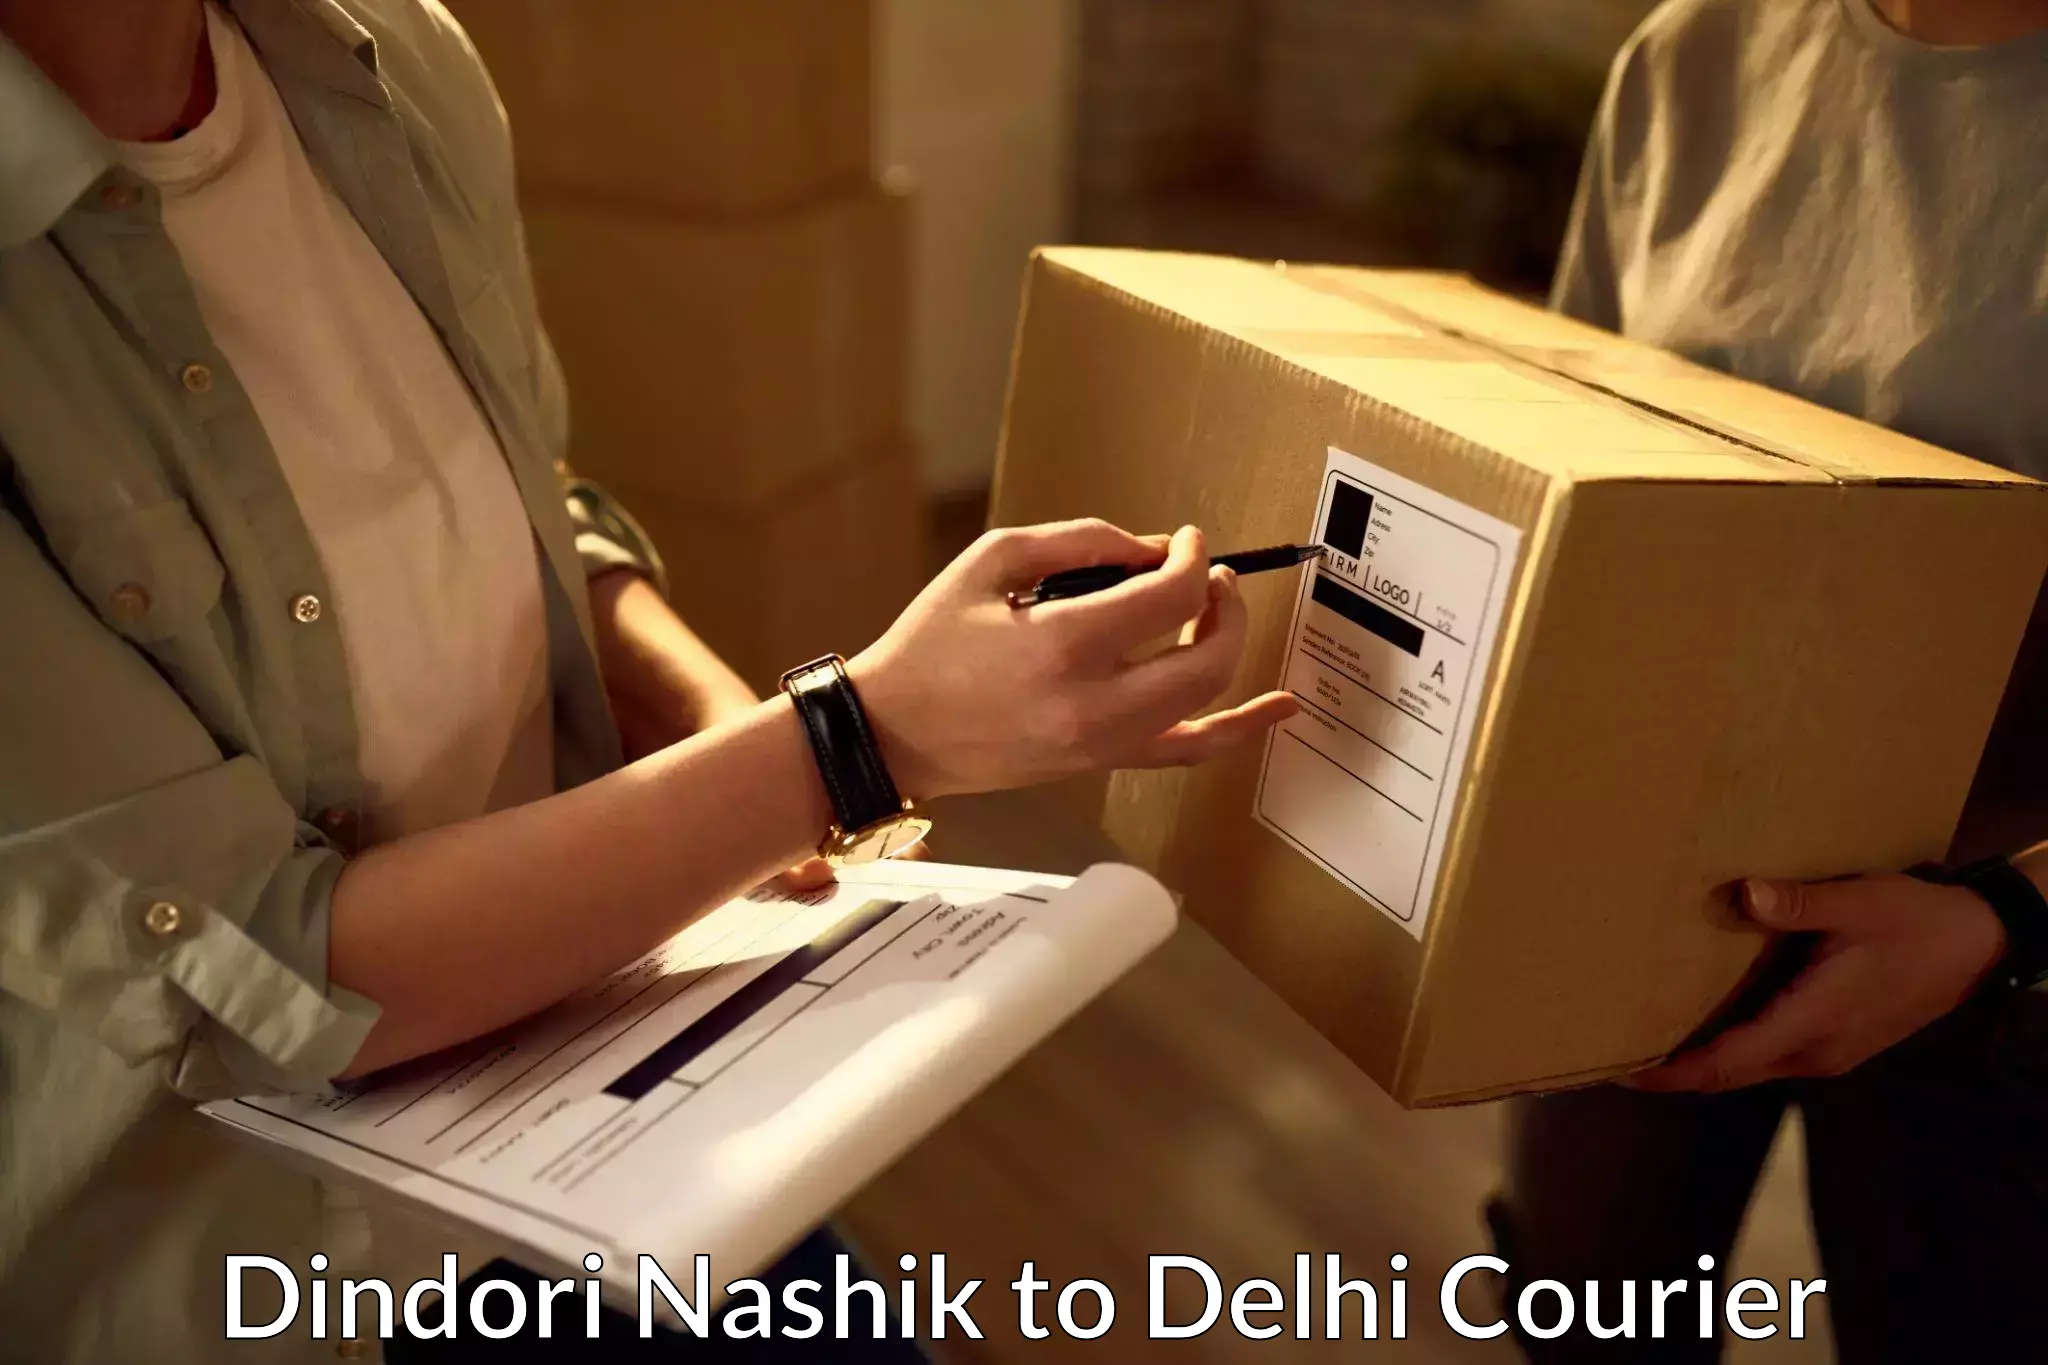 Secure packaging Dindori Nashik to Delhi